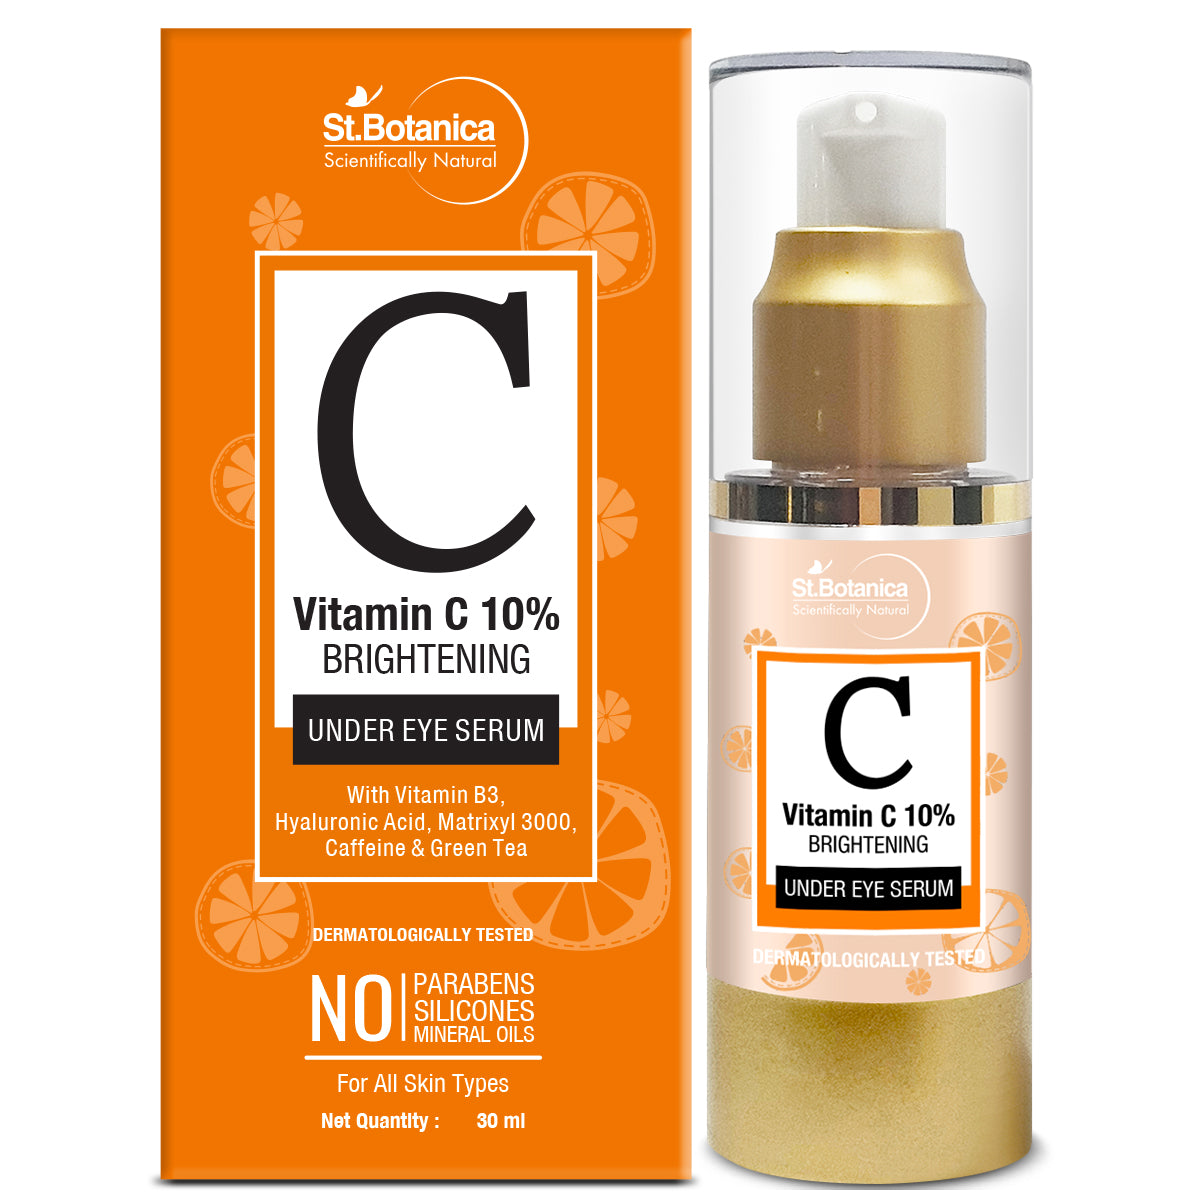 St.Botanica Vitamin C 10% Brightening Under Eye Serum, Face Serum With Vitamin C, E, B3, Hyaluronic Acid, Caffeine and Green Tea, 30 ml